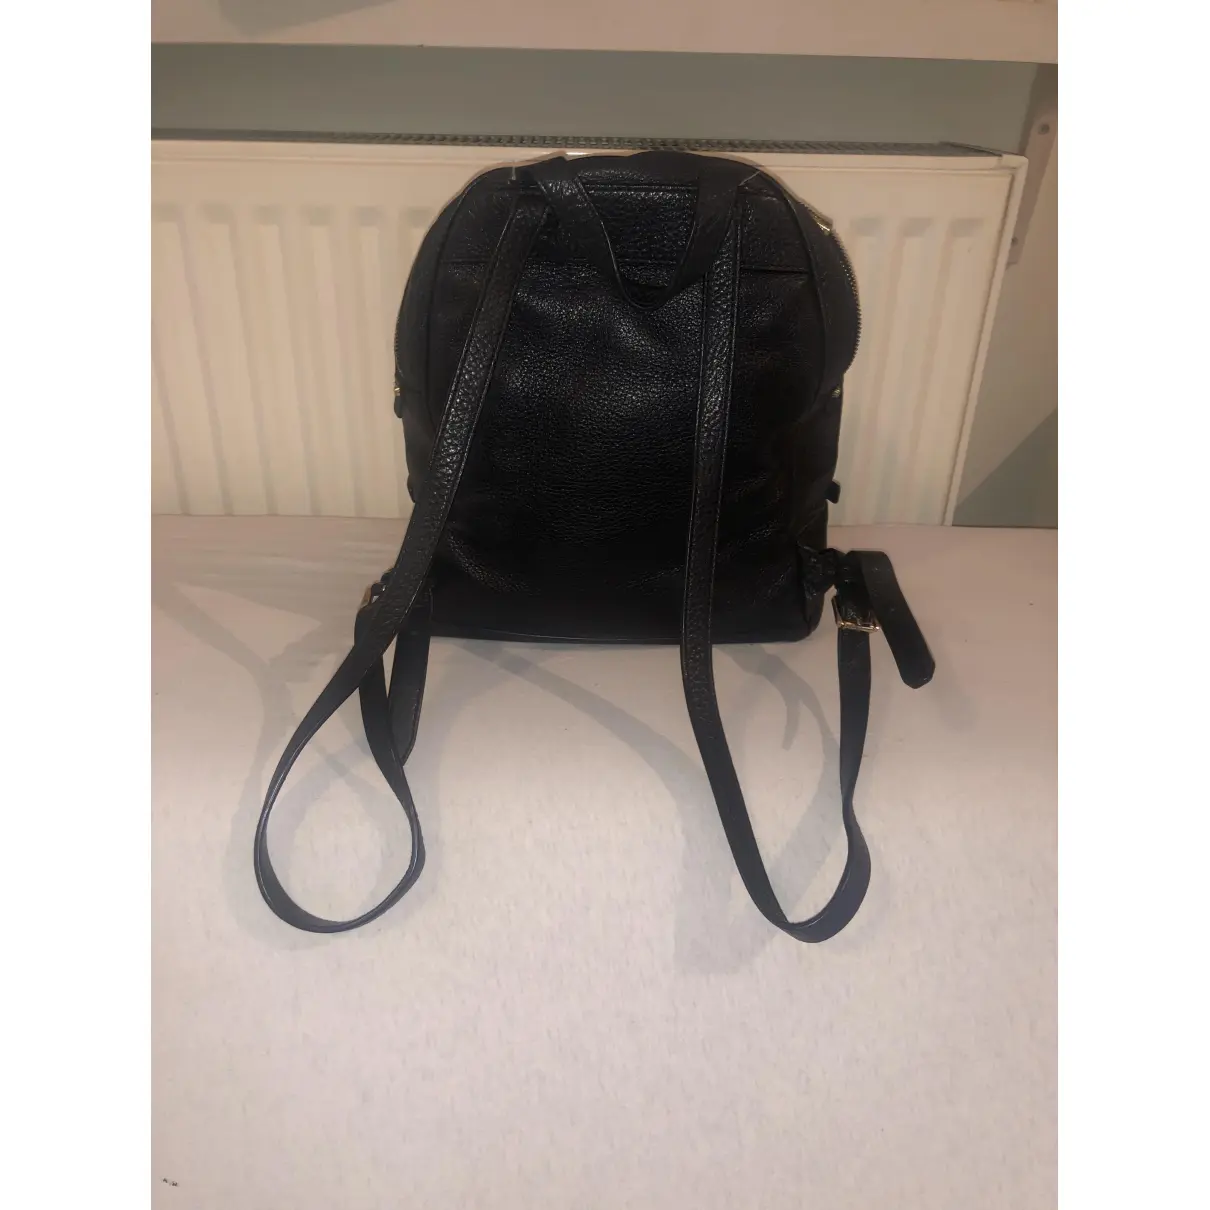 Buy Michael Kors Rhea leather backpack online